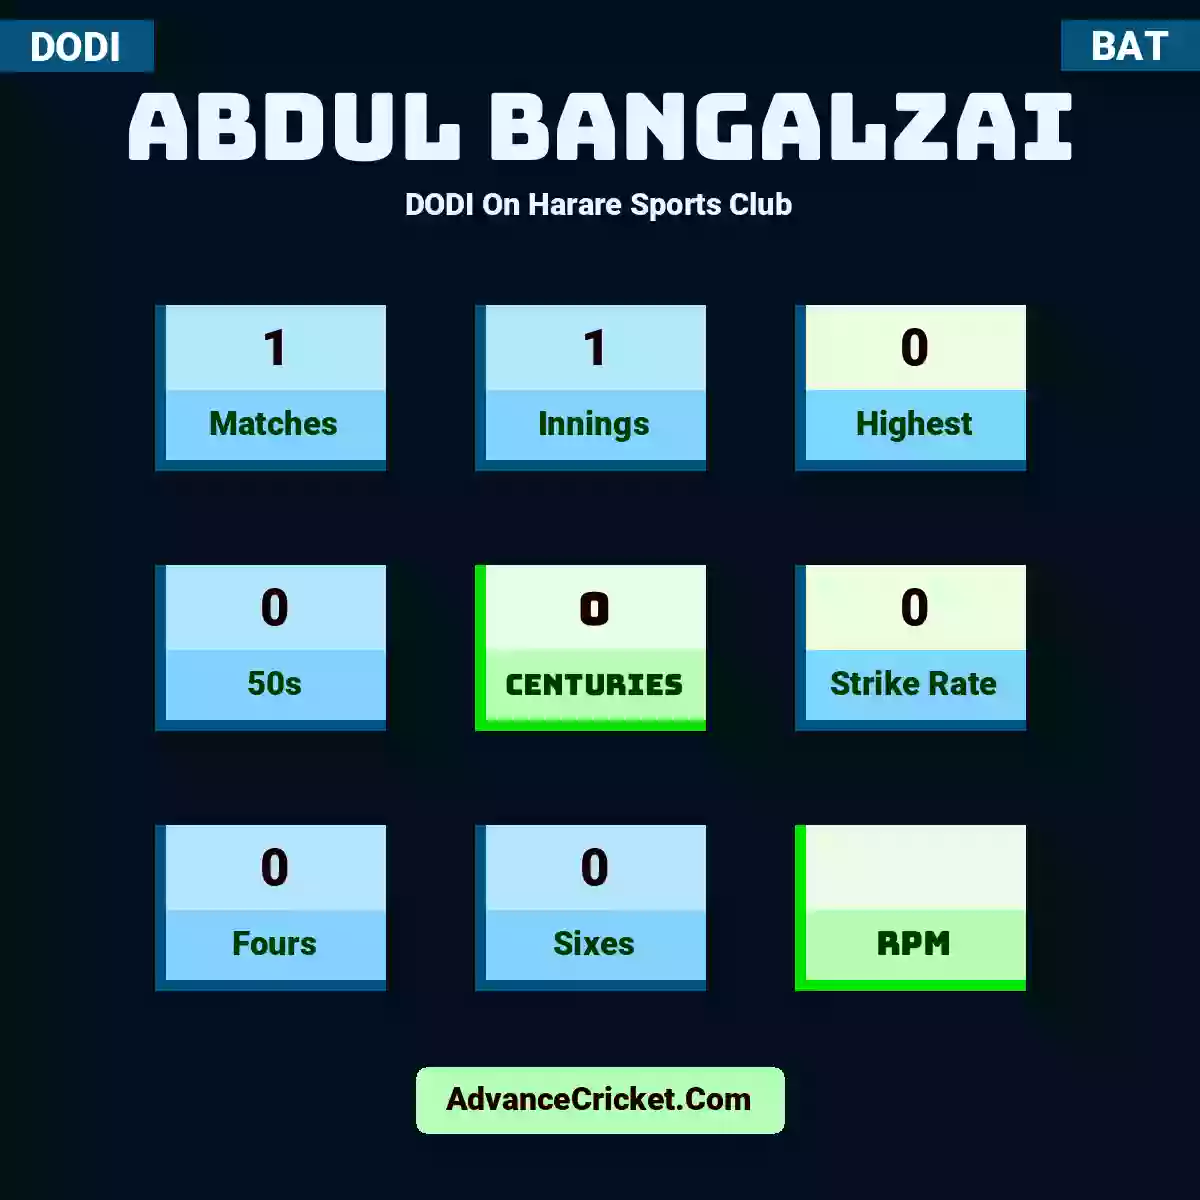 Abdul Bangalzai DODI  On Harare Sports Club, Abdul Bangalzai played 1 matches, scored 0 runs as highest, 0 half-centuries, and 0 centuries, with a strike rate of 0. A.Bangalzai hit 0 fours and 0 sixes.